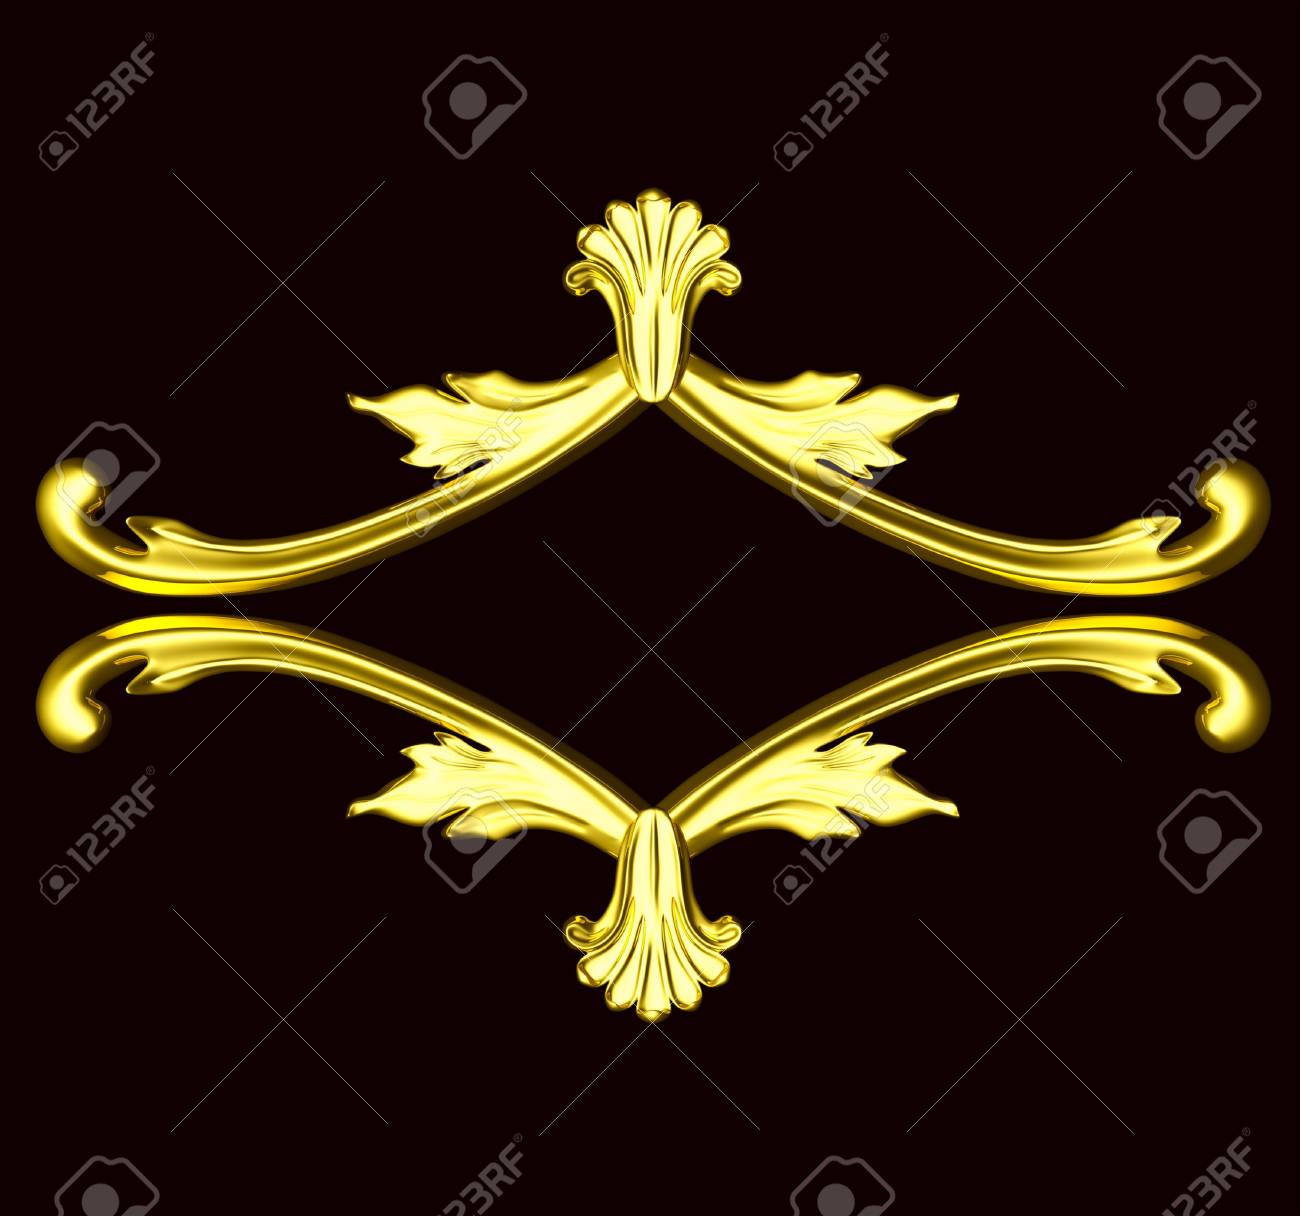 3d Gold Ornament The Sculptural Form On A Dark Velvet Background